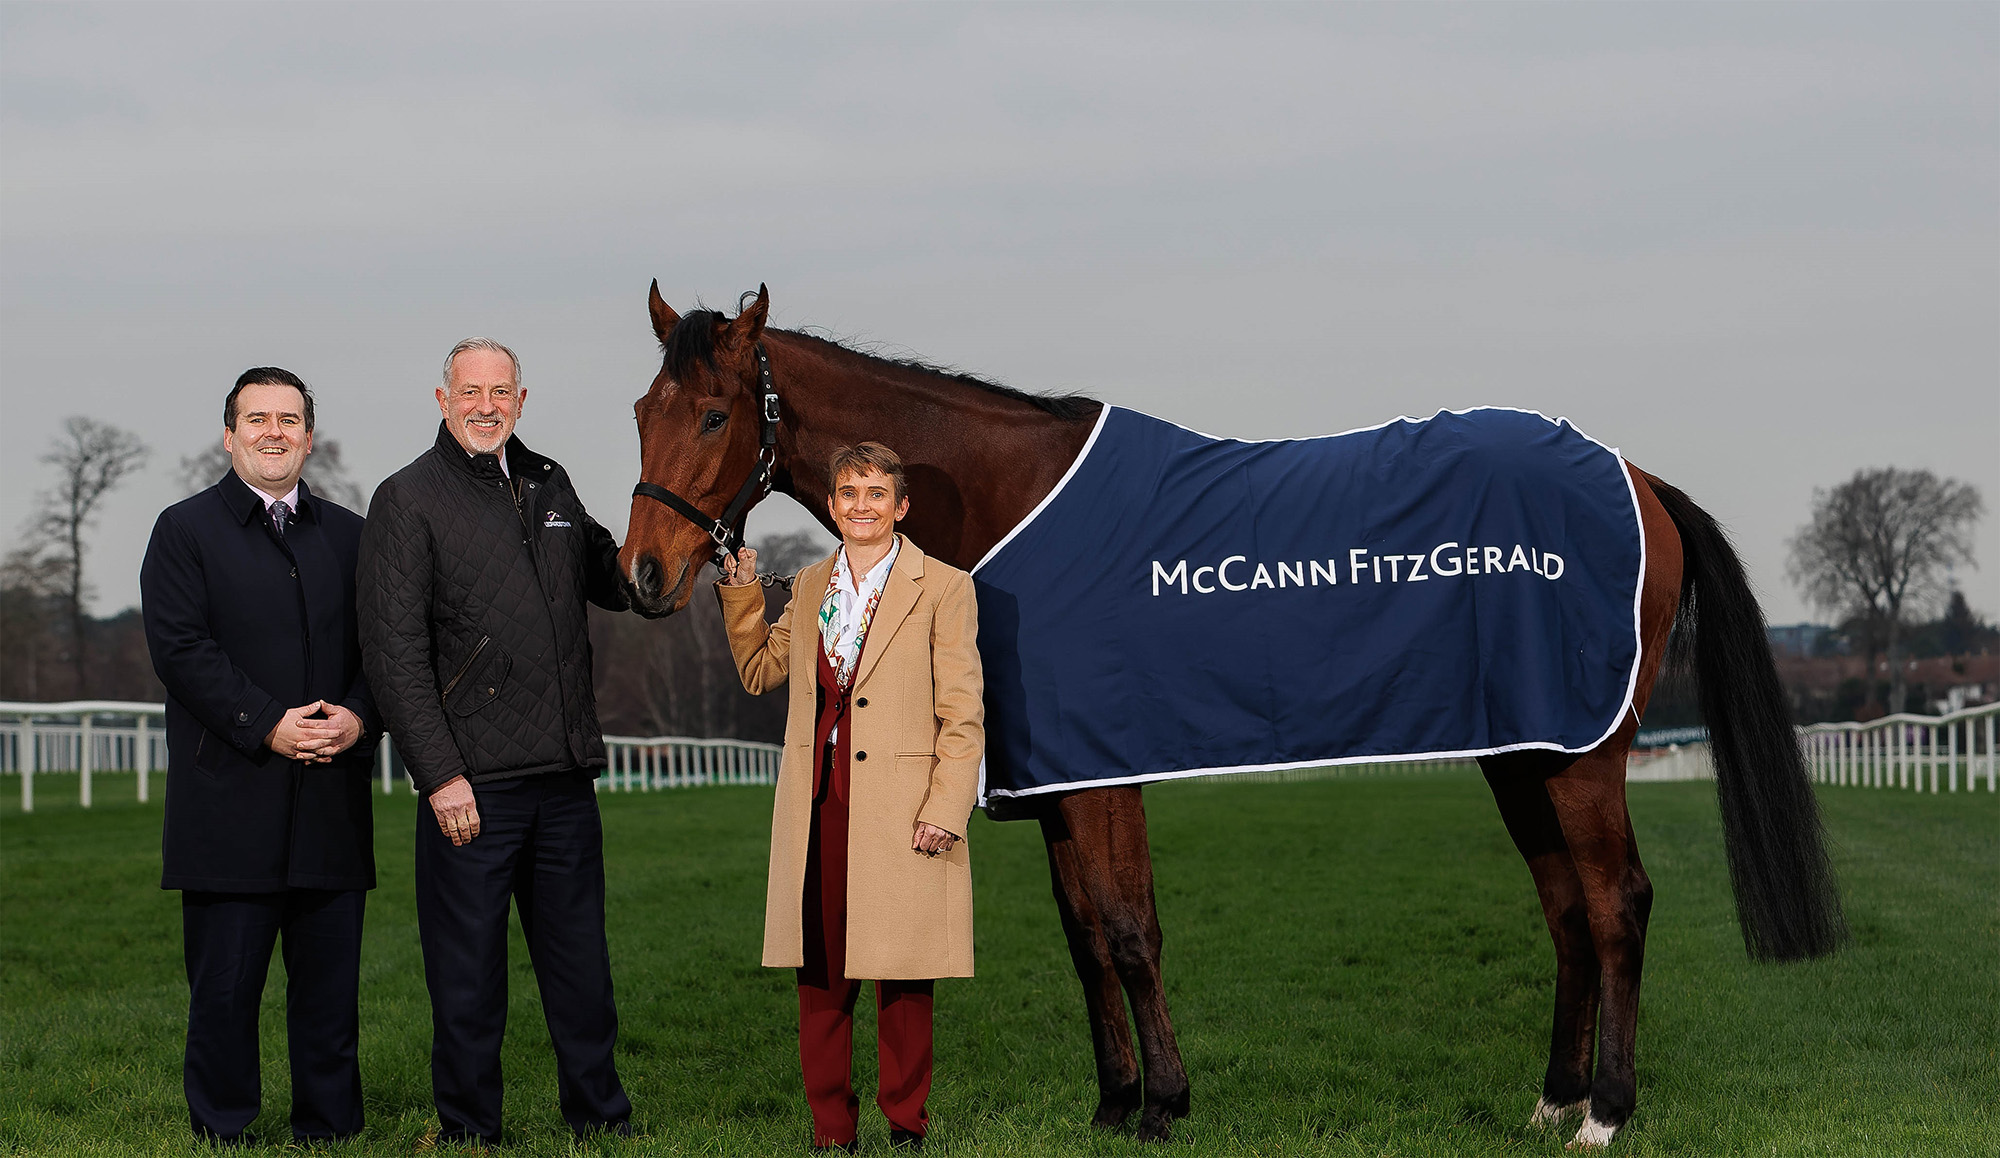 McCann FitzGerald to sponsor prestigious horse race